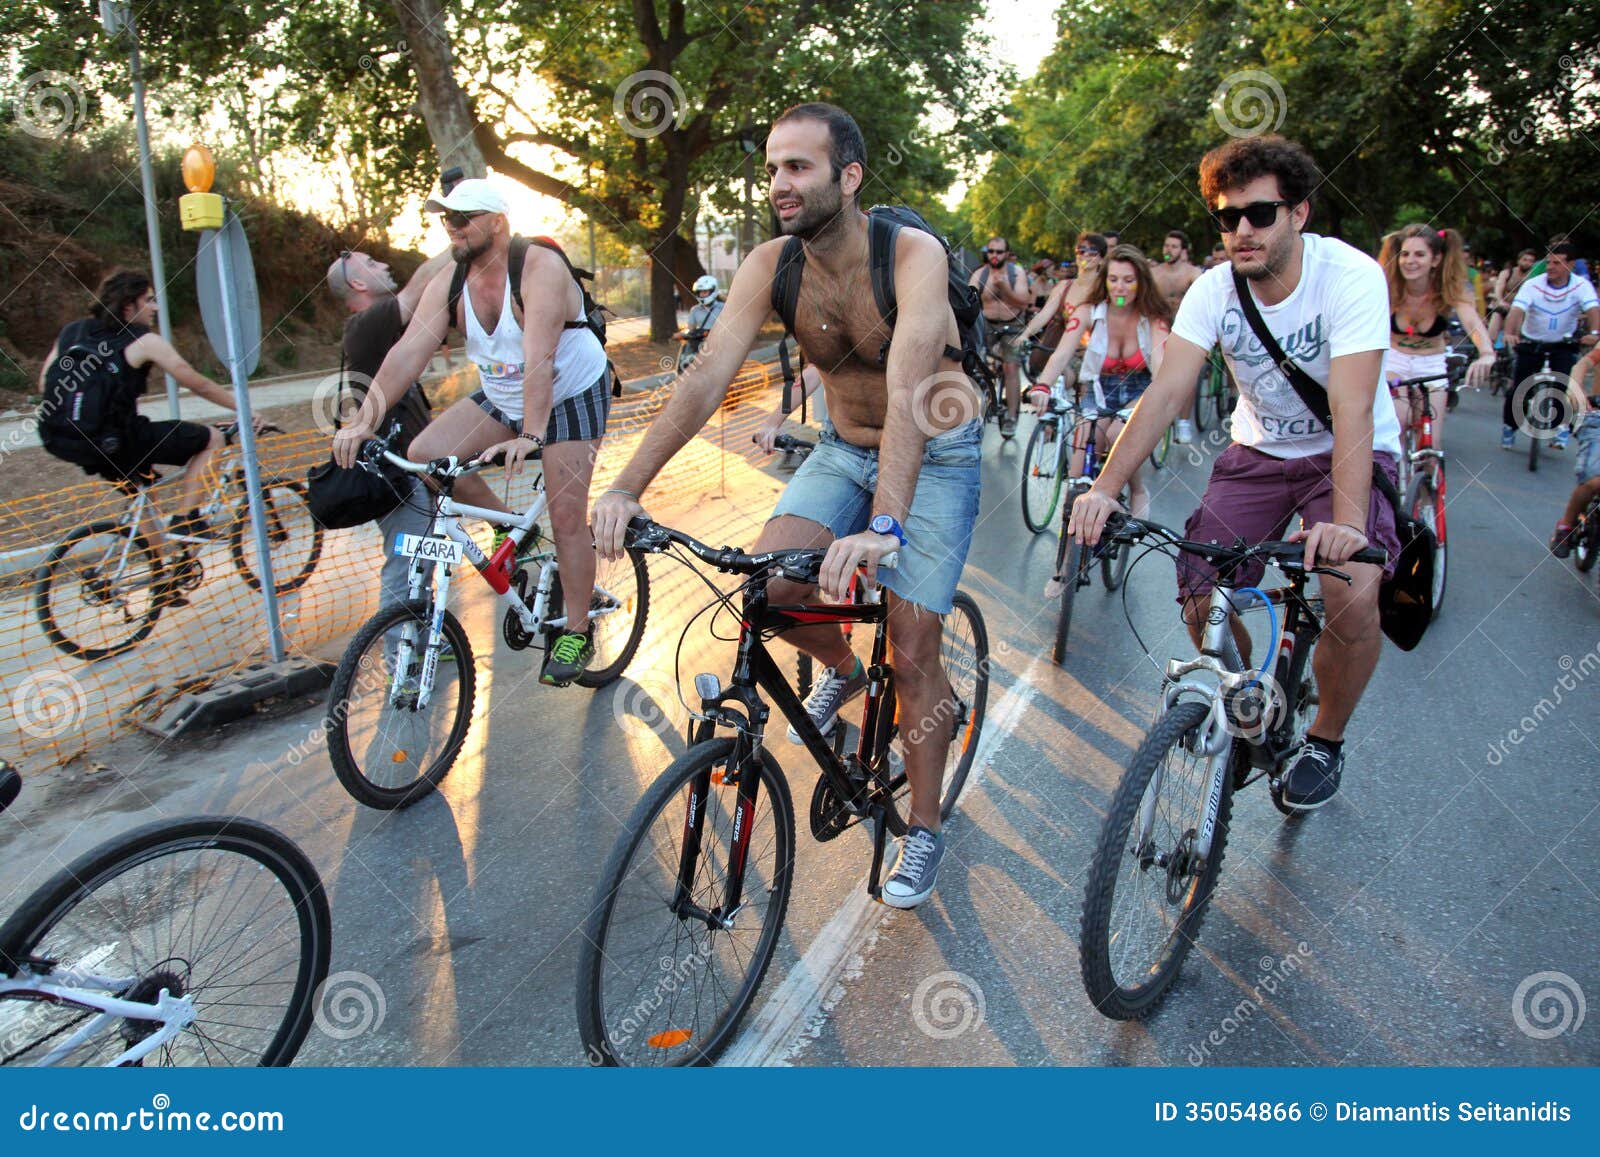 Naked Bicycle Race In Thessaloniki - NakeD Bicycle Race Thessaloniki Greece Jun Bicyclists Throng Start Annual ParaDe Jun ParaDe Celebrates 35054866